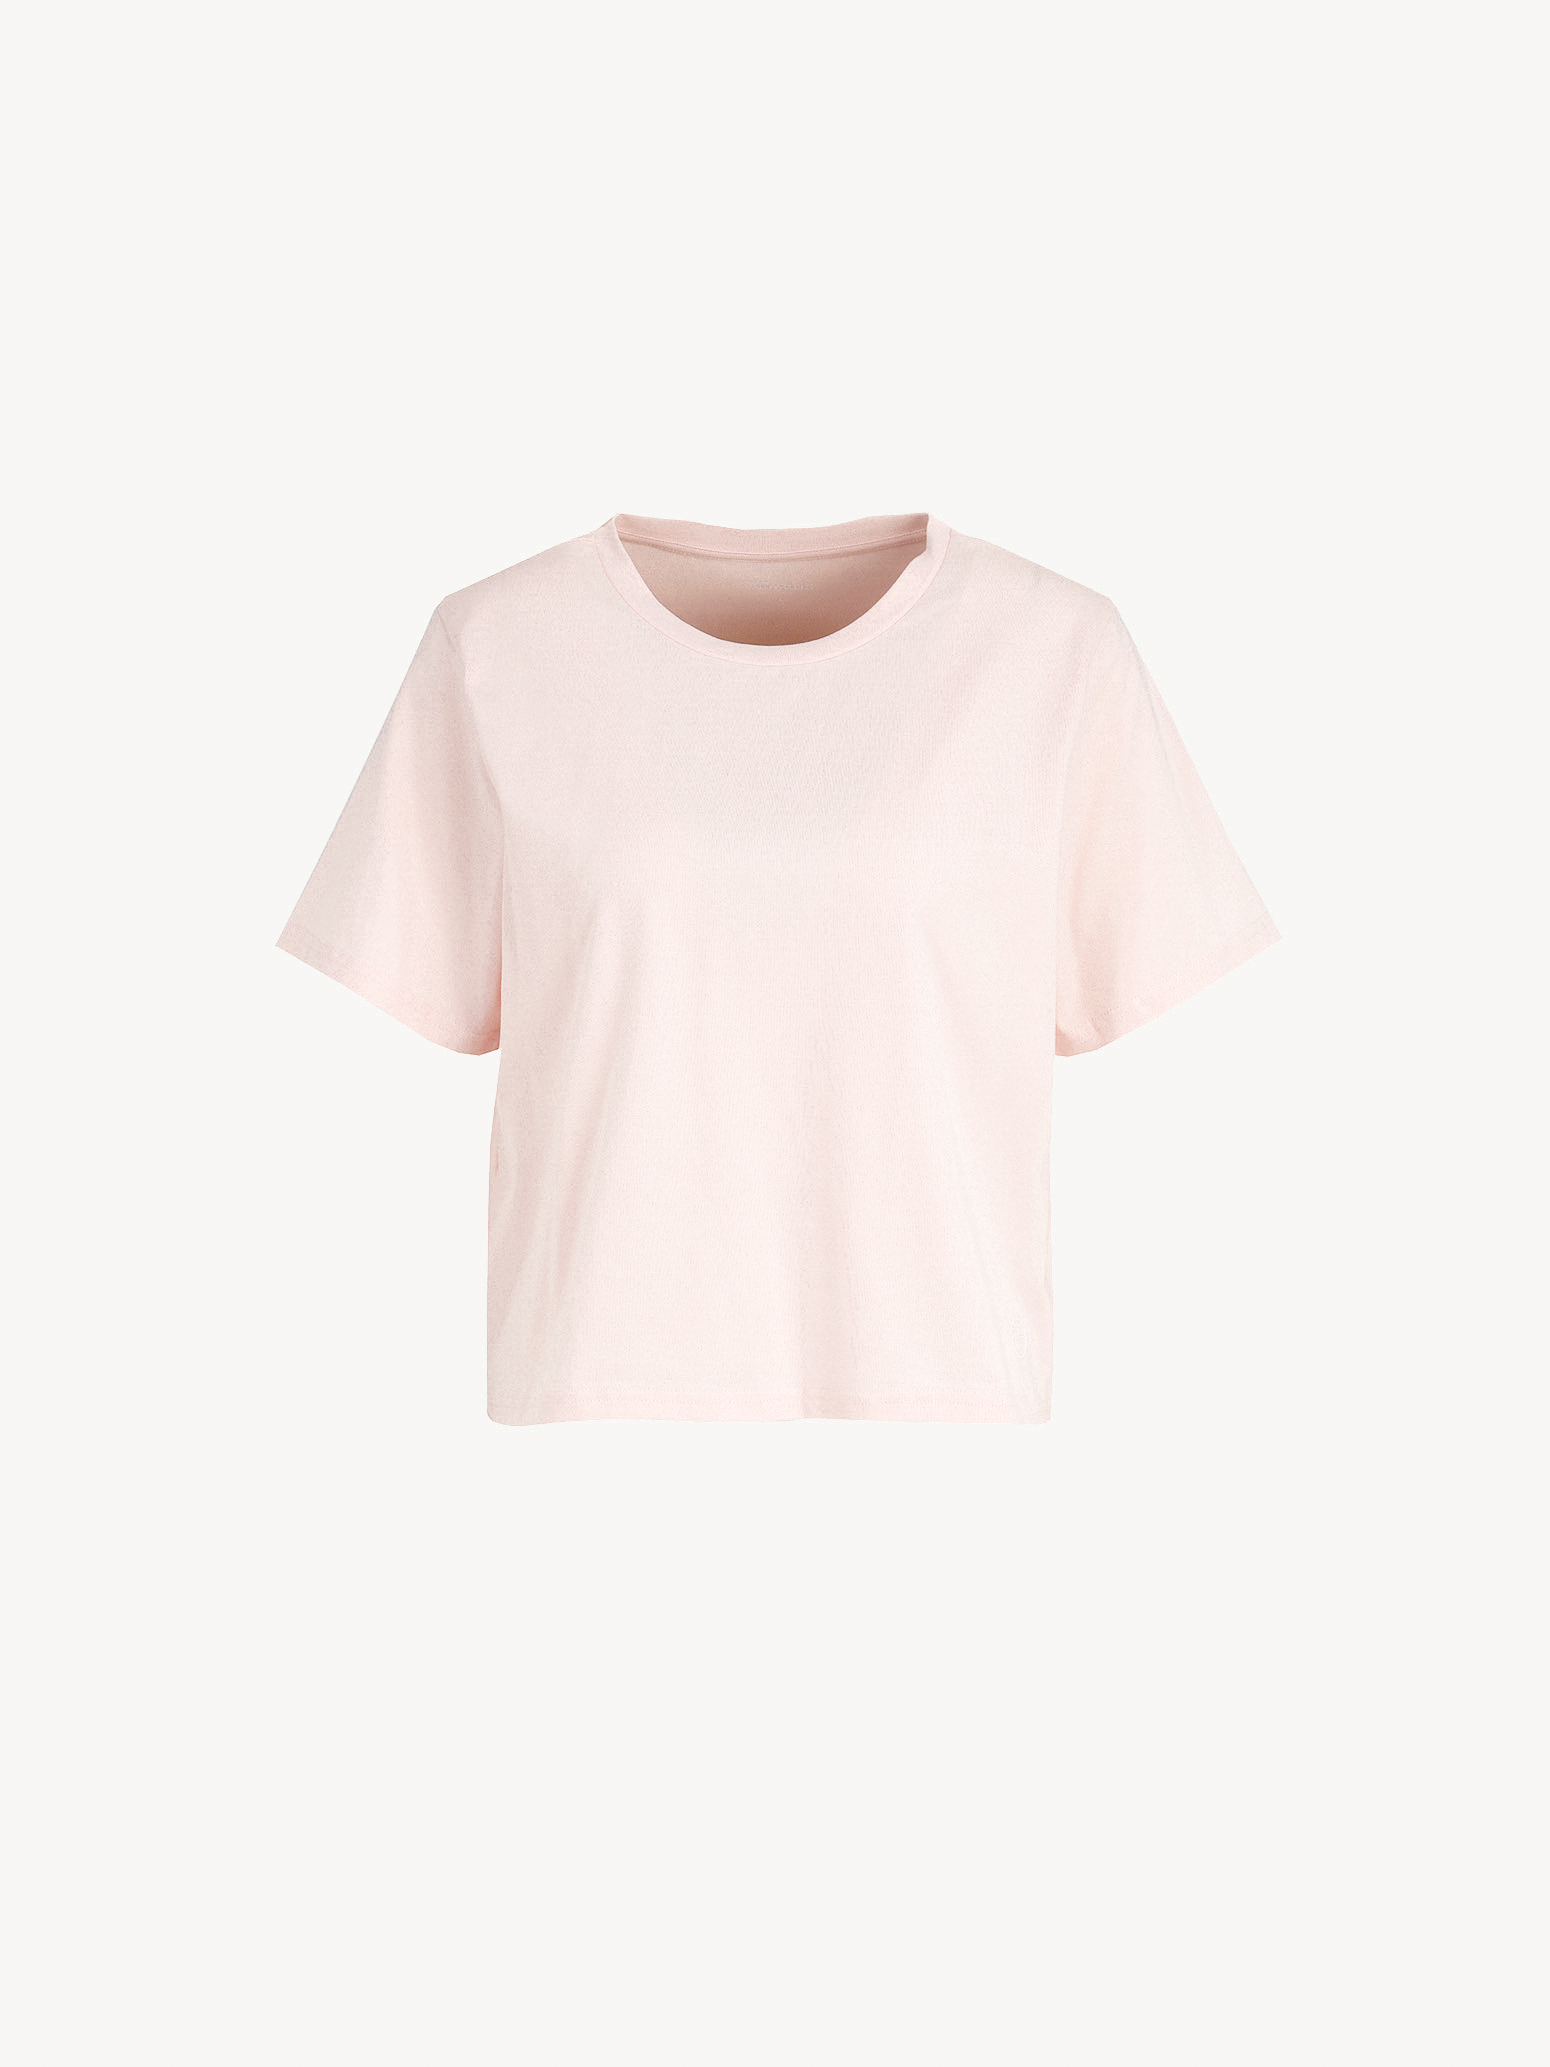 Oversized T-shirt - rose, Cloud Pink, hi-res